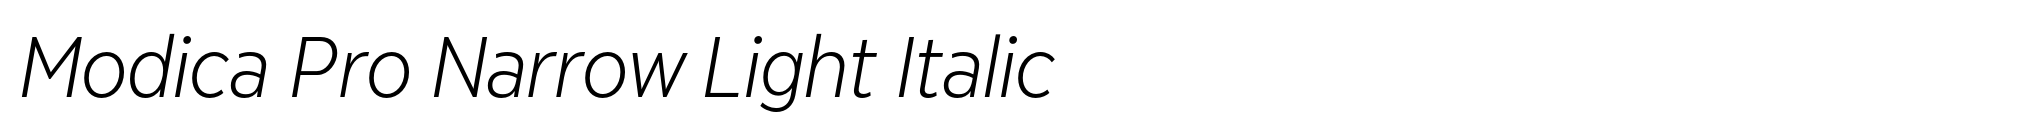 Modica Pro Narrow Light Italic image